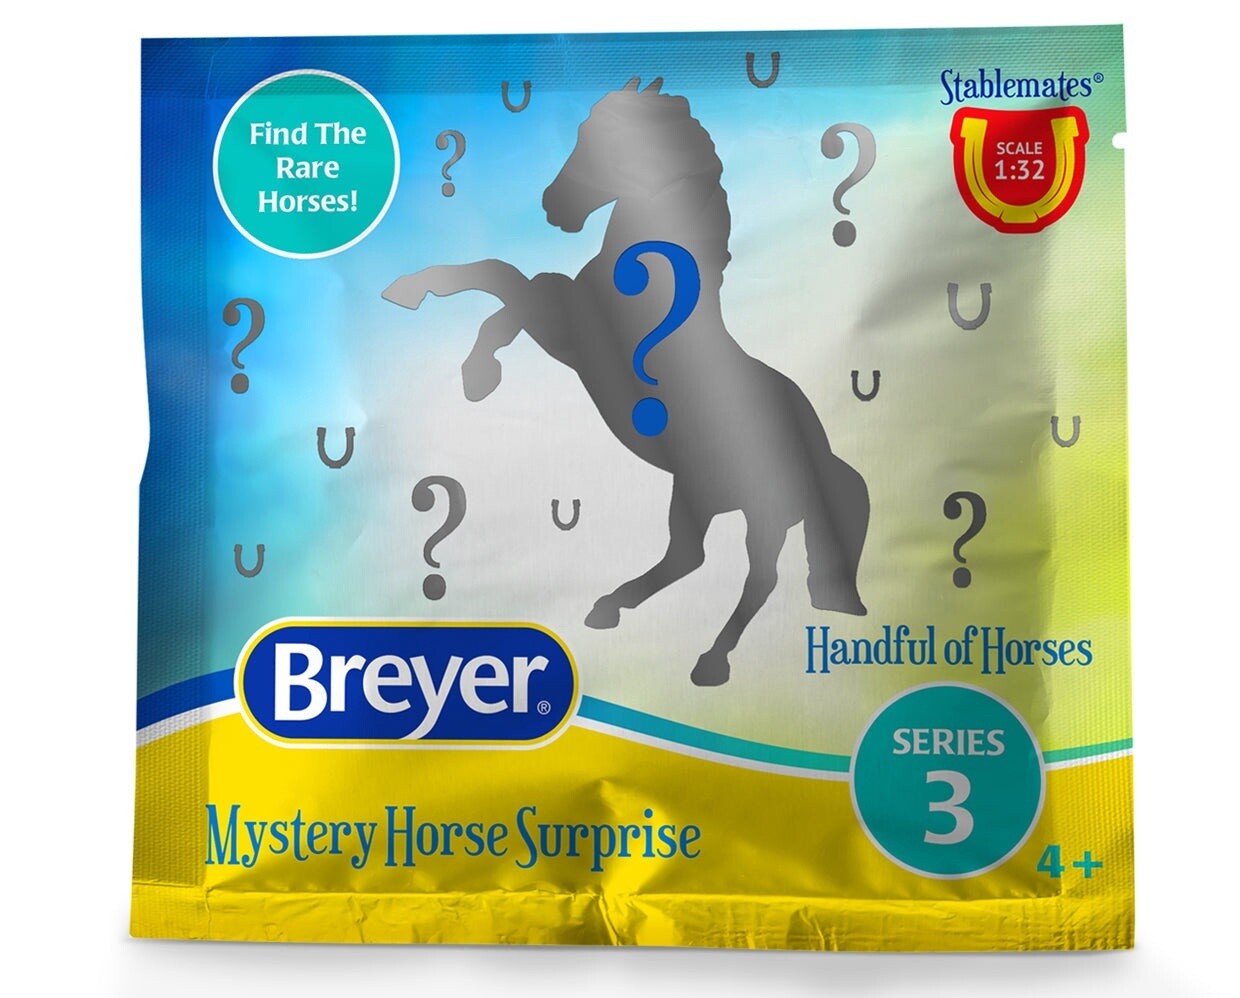 Breyer Mystery Horse Surprise: Handful of Horses